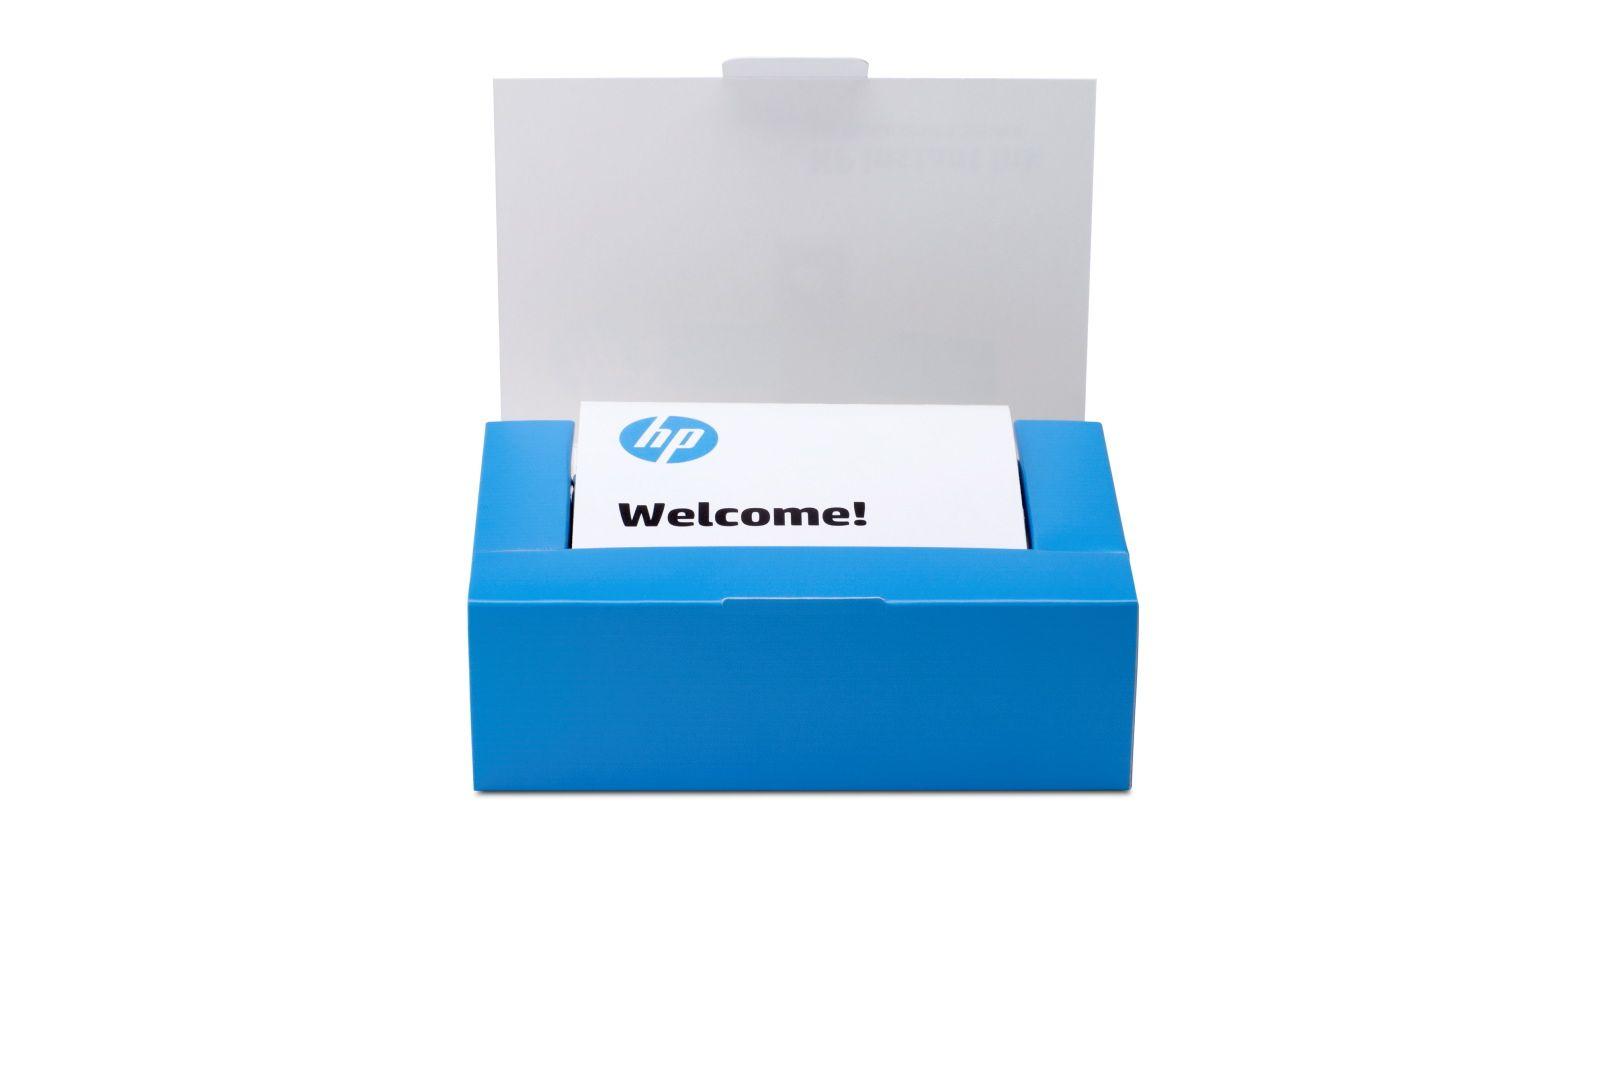 HP Ink Logo - HP Press Kit: HP Instant Ink